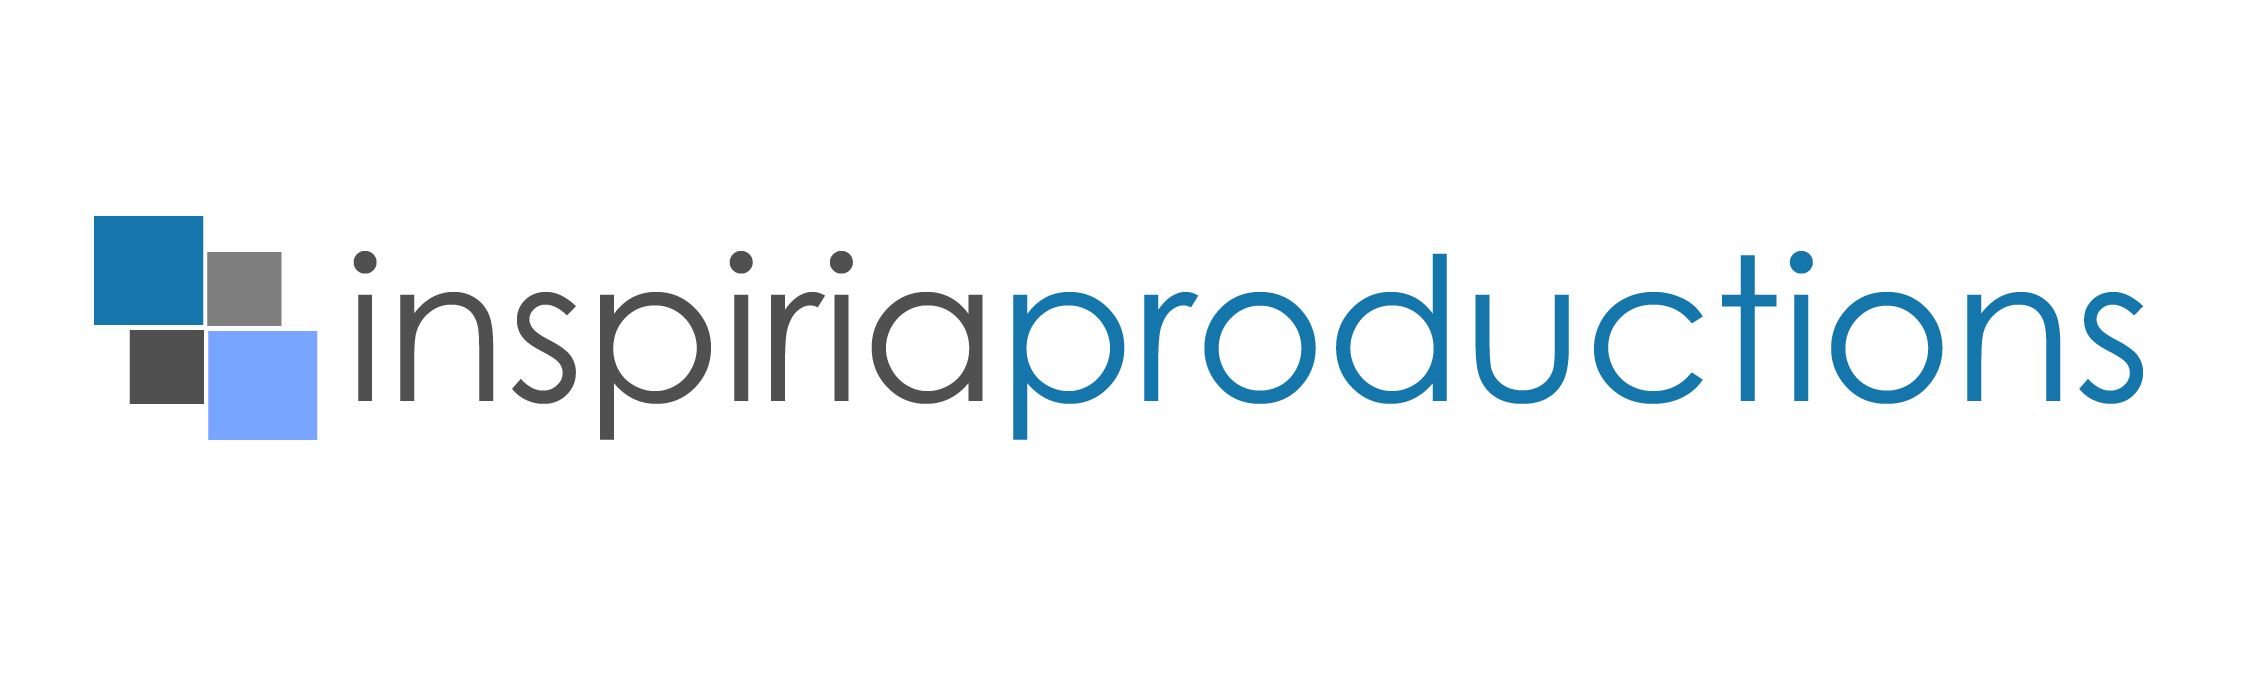 inspiria productions GmbH